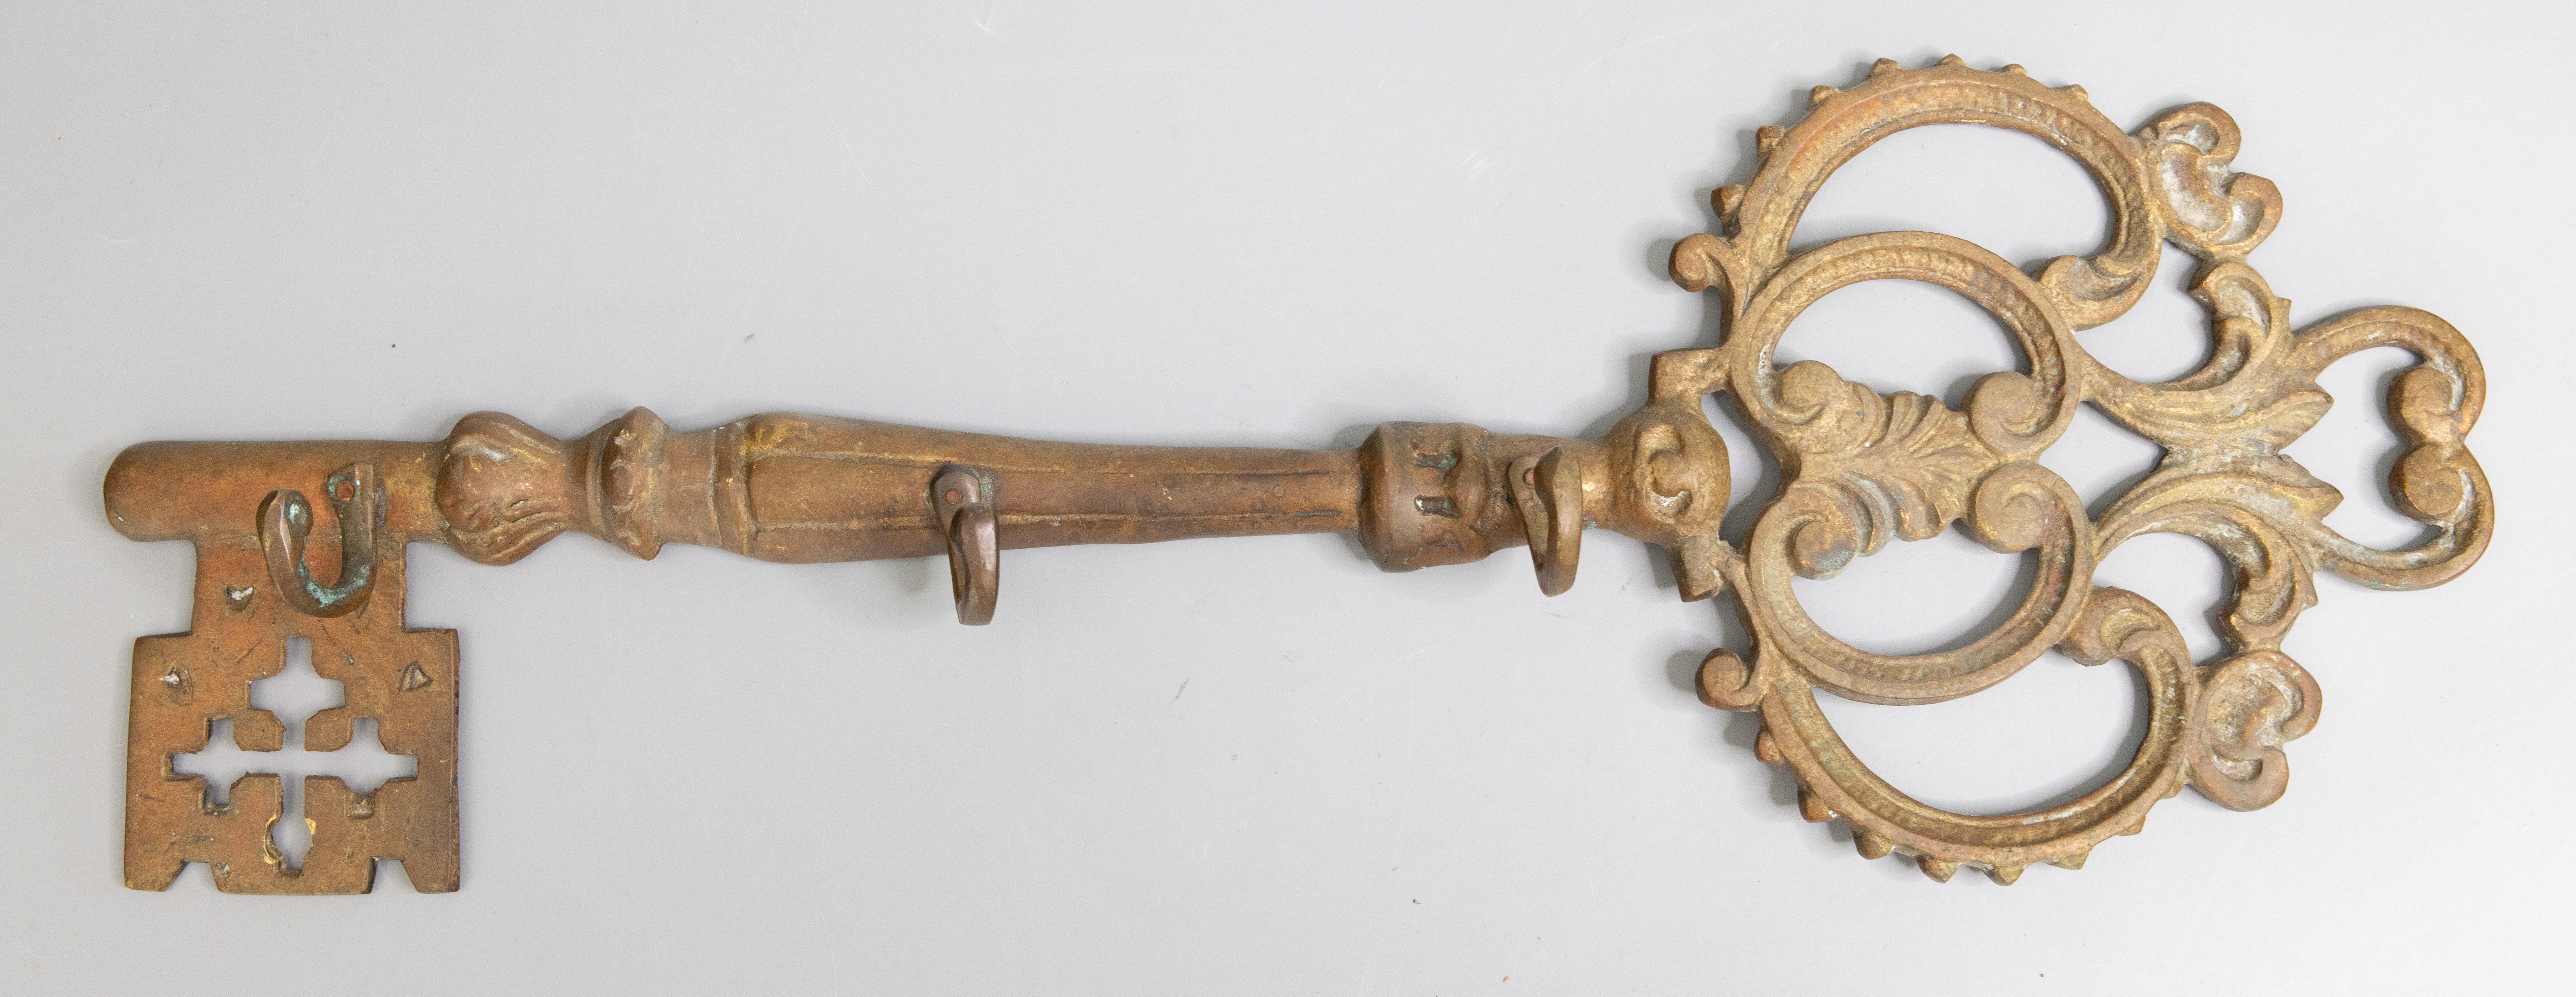 Large Antique Art Nouveau French Brass Key Shaped Coat & Hat Rack For Sale 2